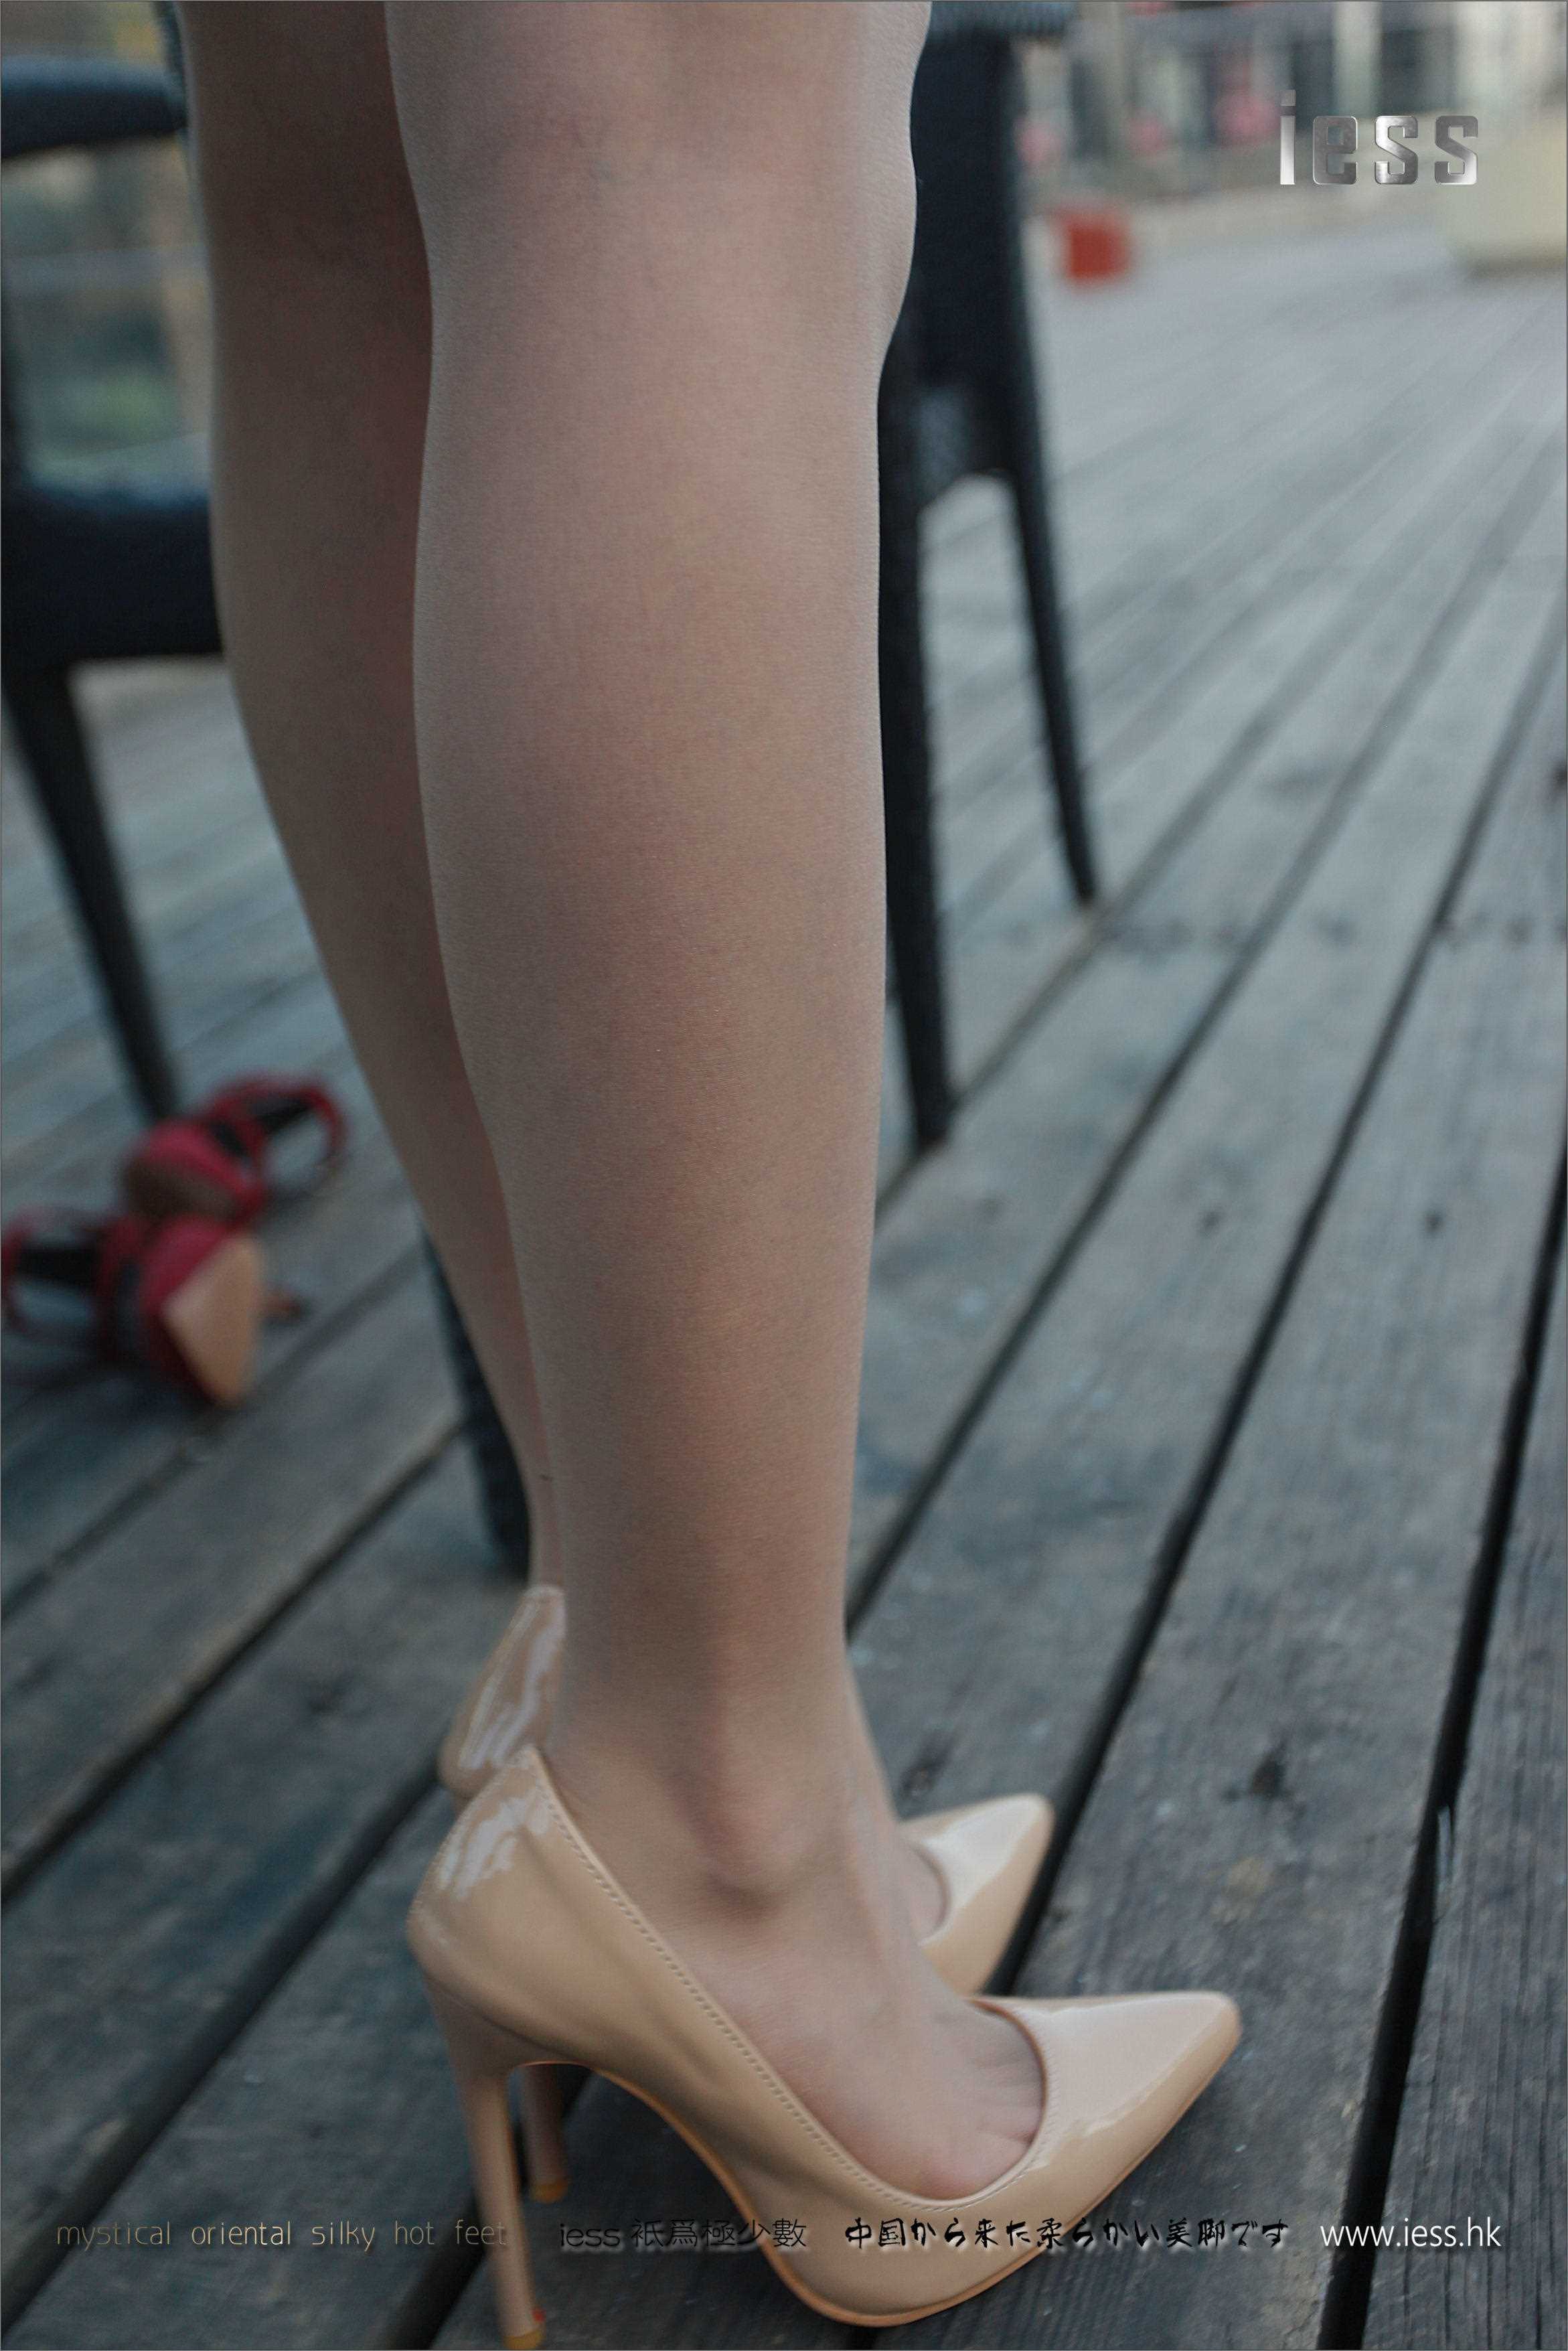 China Beauty Legs and feet 178